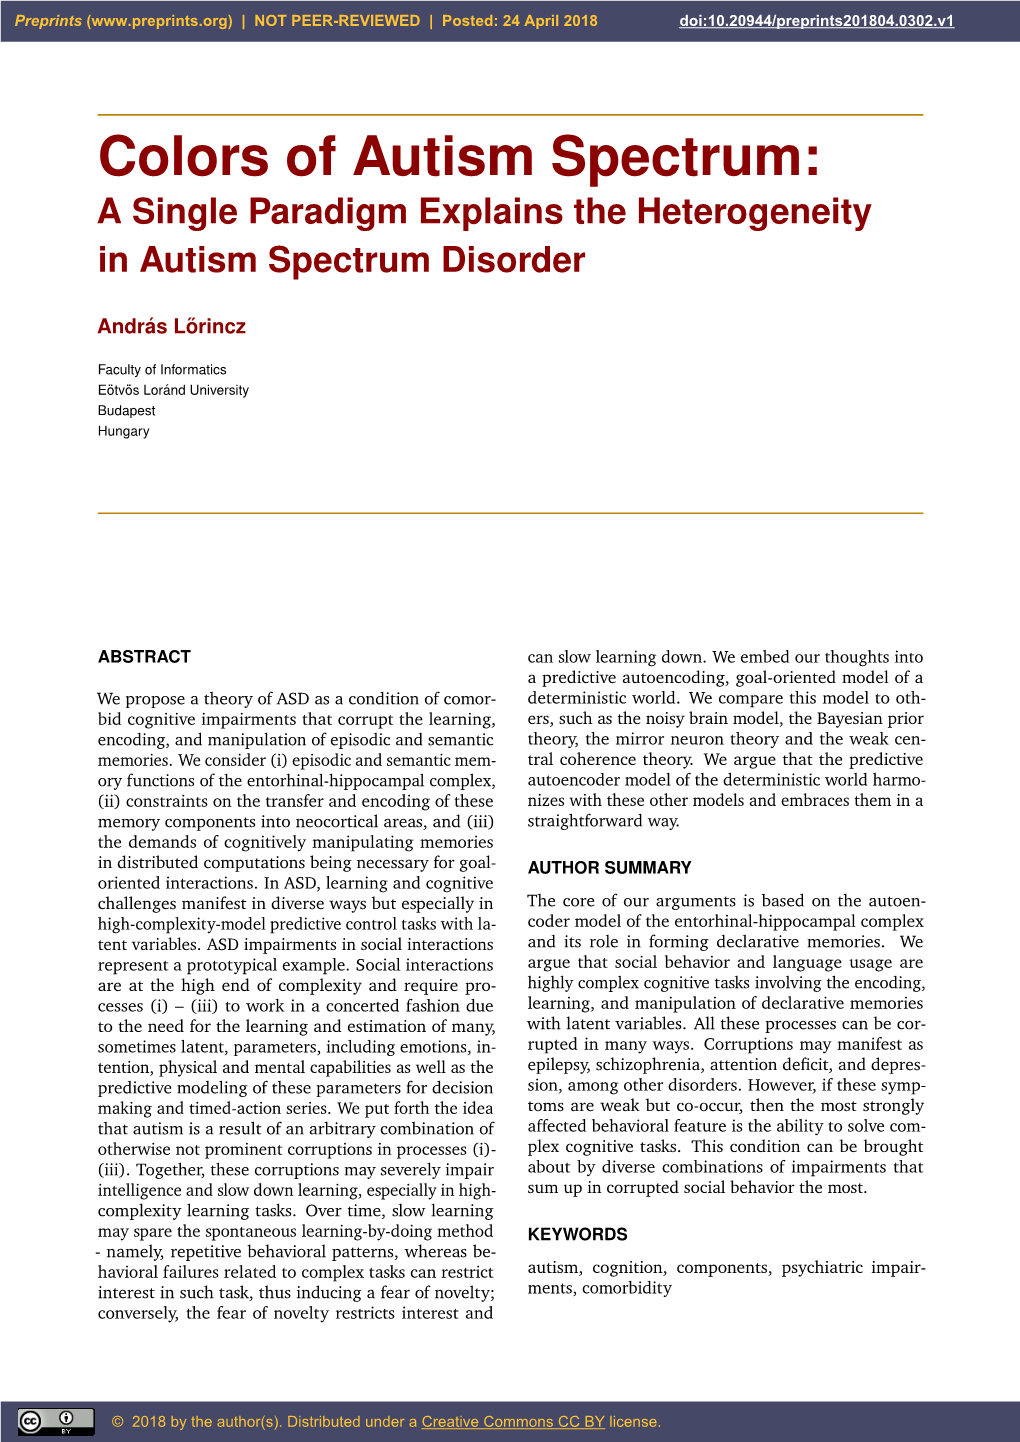 Colors of Autism Spectrum: a Single Paradigm Explains the Heterogeneity in Autism Spectrum Disorder